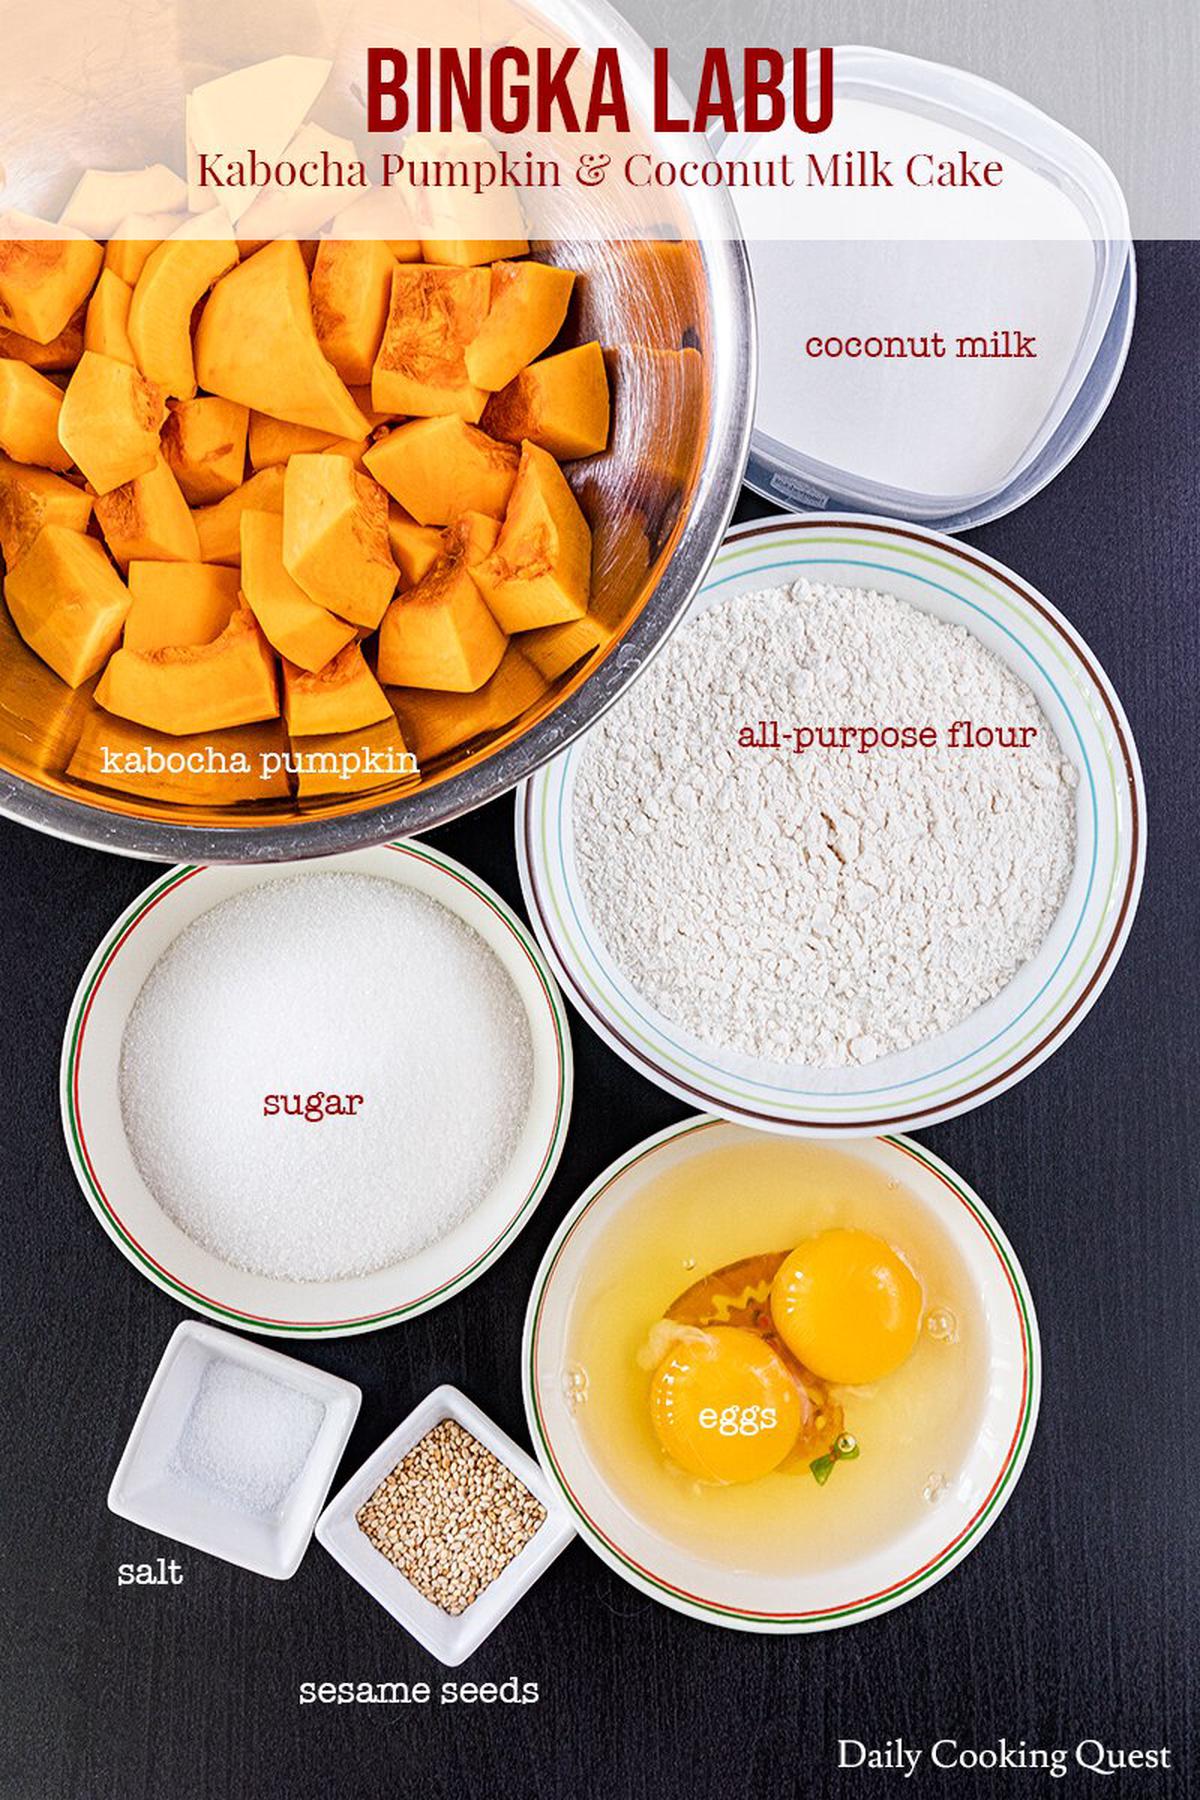 Ingredients to prepare bingka labu - Indonesian kabocha pumpkin and coconut milk cake.